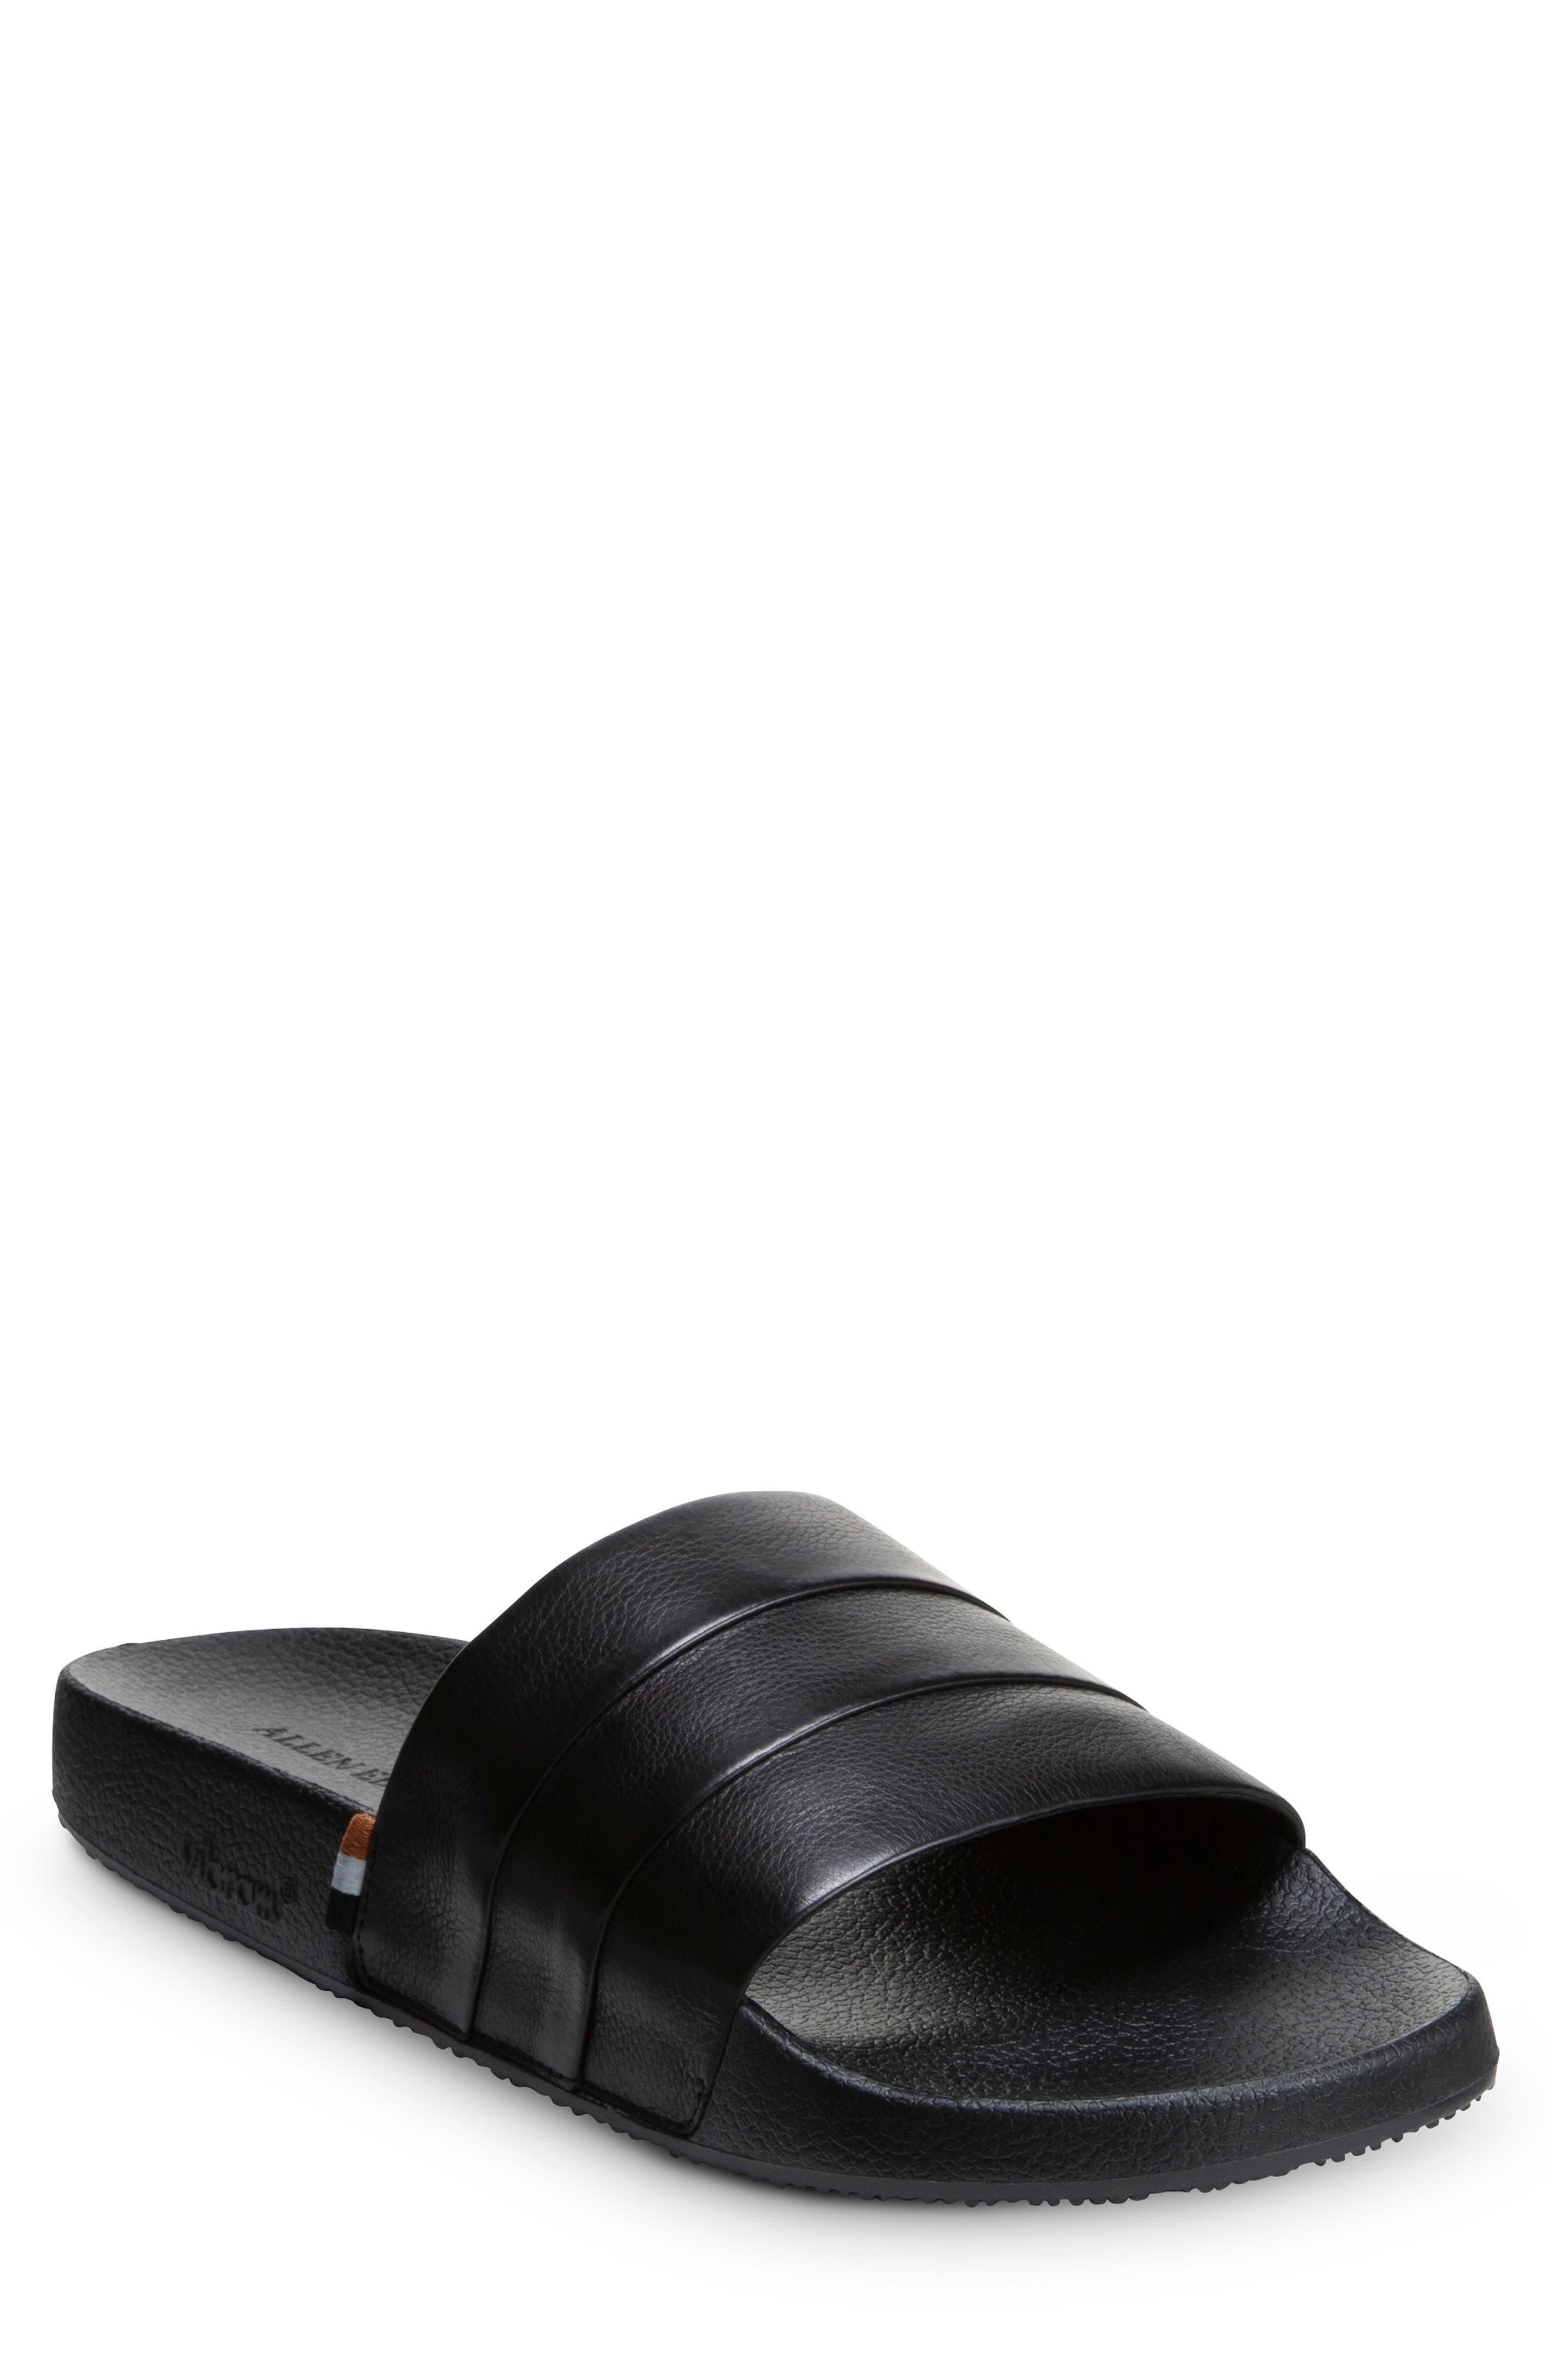 Allen Edmonds Nantucket Slide Sandal In Black At Nordstrom Rack for Men |  Lyst